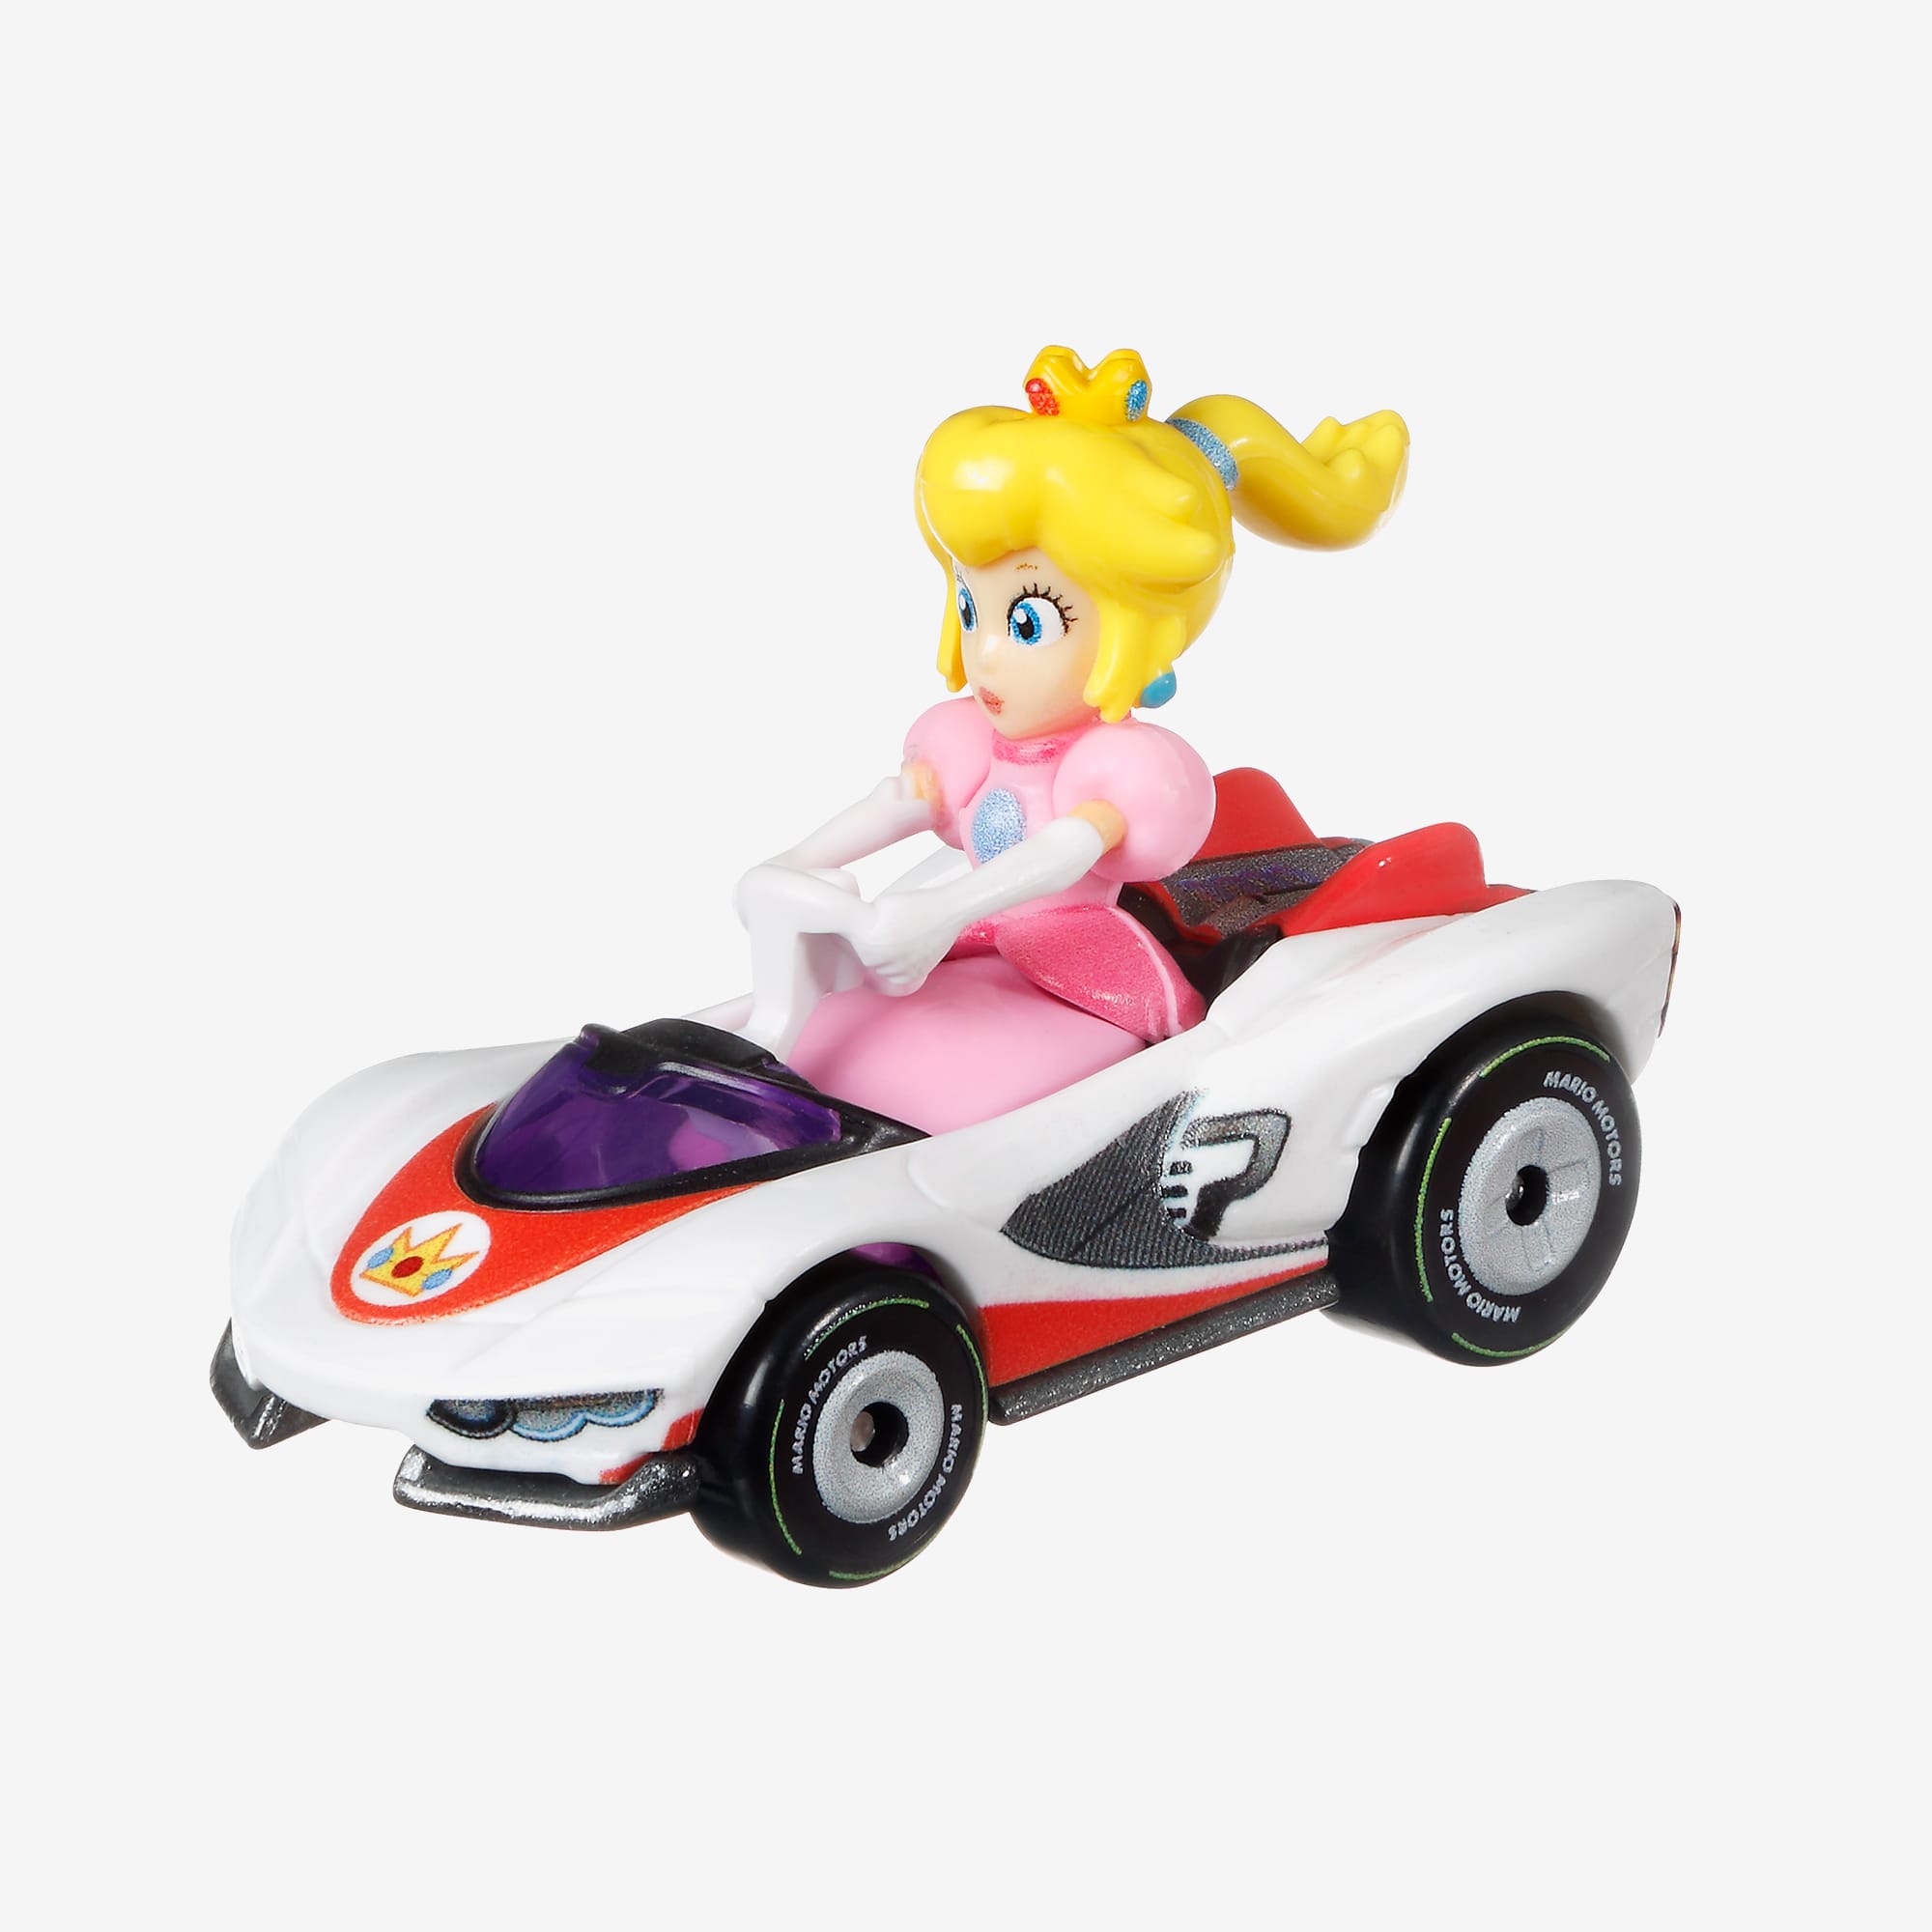 Hot Wheels Mario Kart Vehicle 4-Pack, Set of 4 Fan-Favorite Characters Includes 1 Exclusive Model Orange Shy Guy